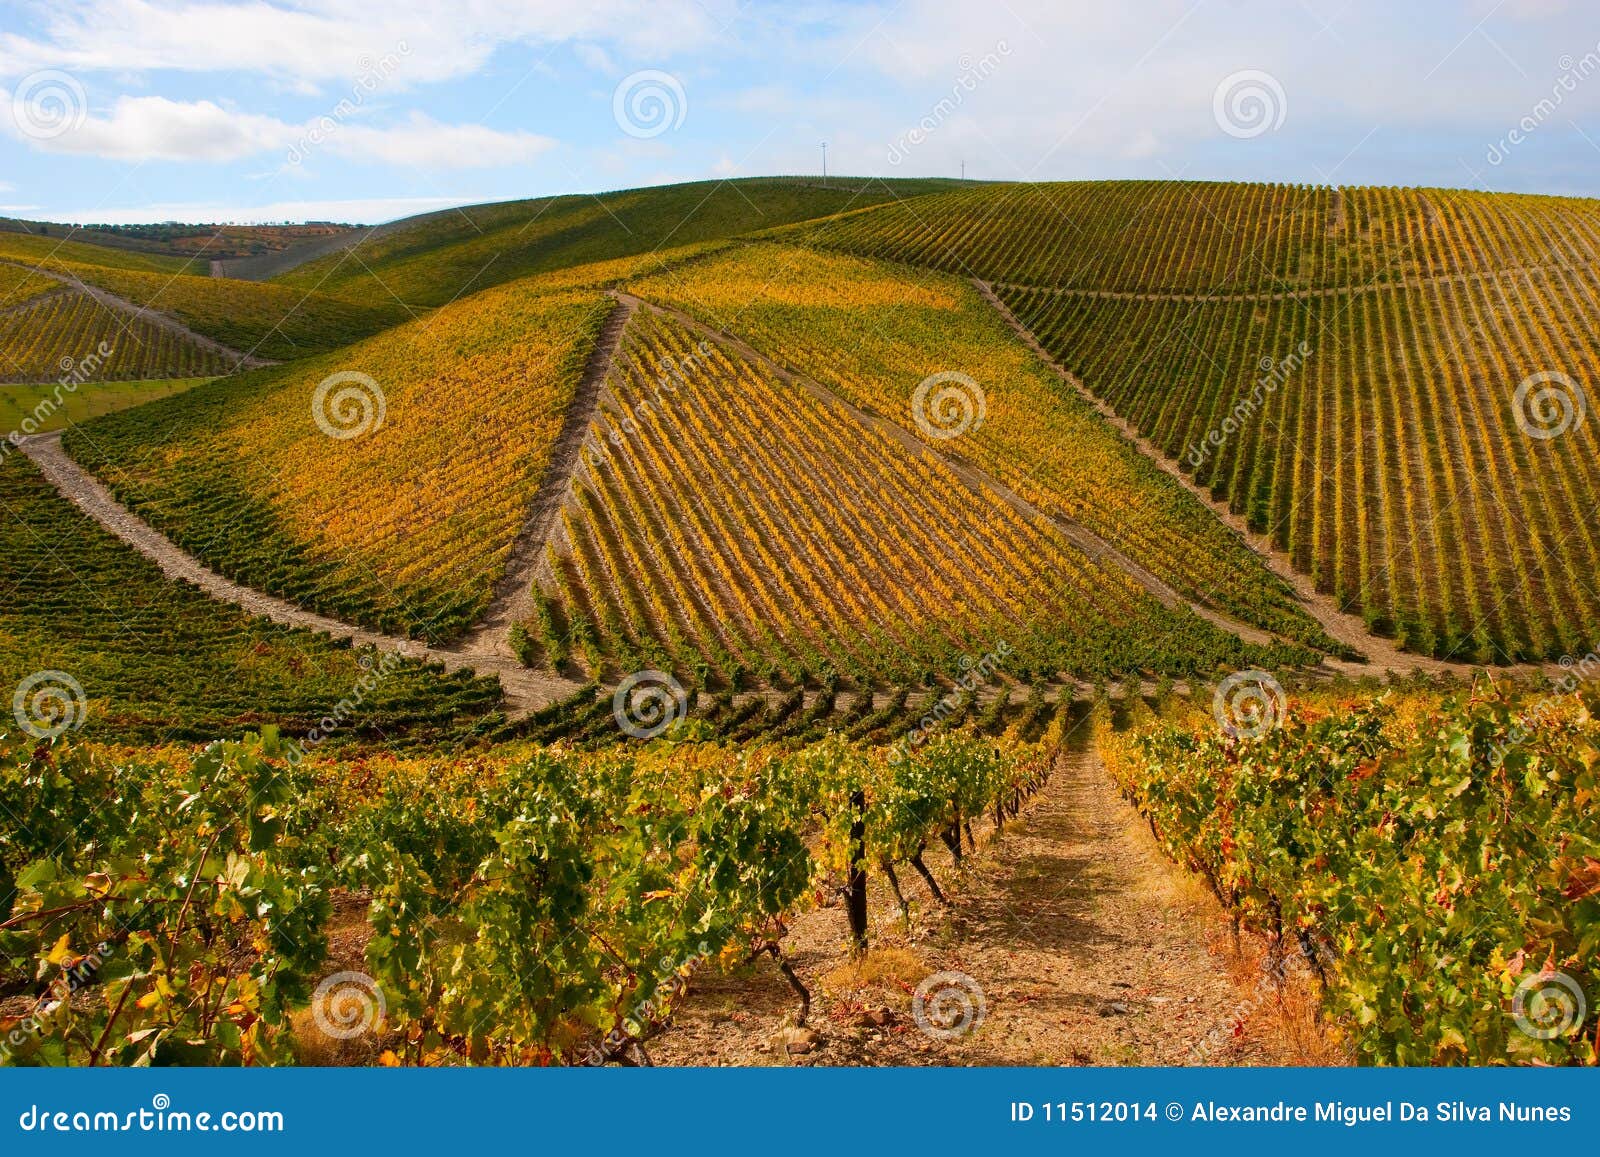 beautiful vineyard landscape